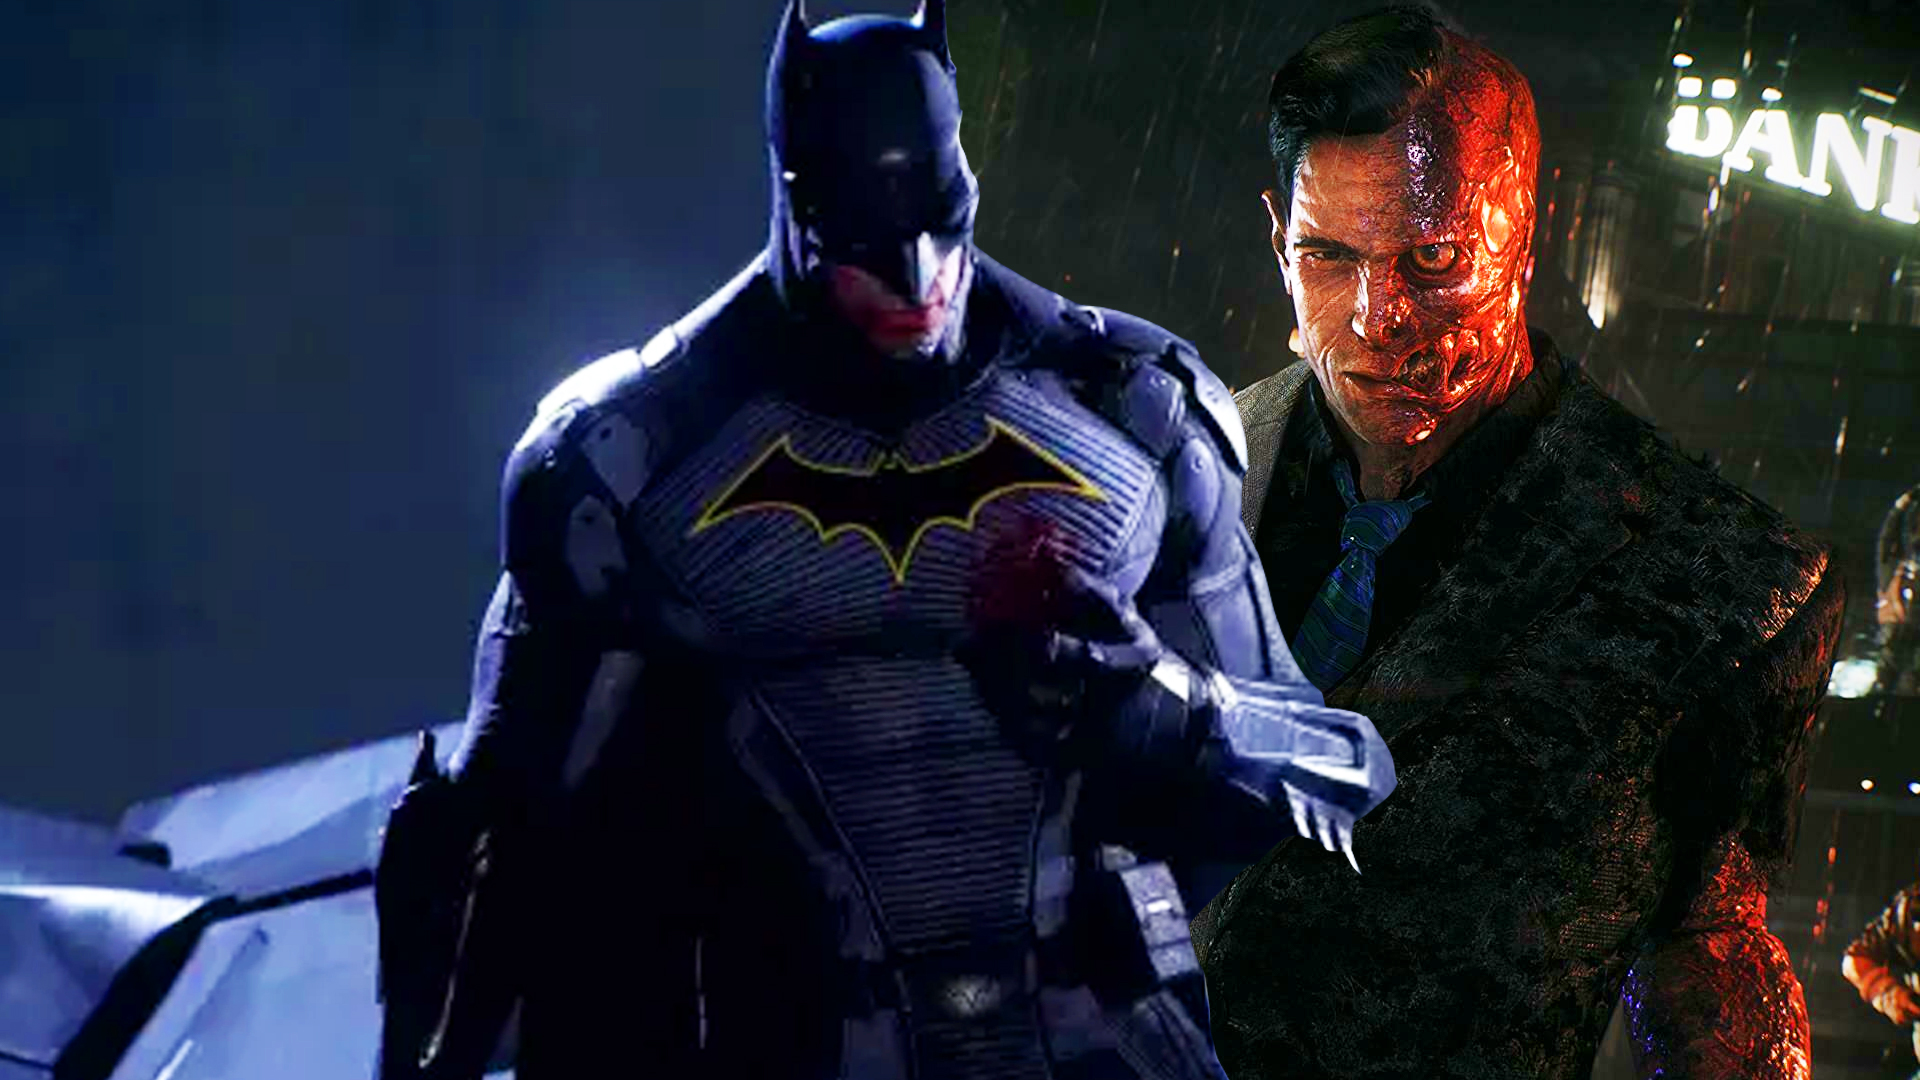 Gotham Knights não terá multiplayer local nem crossplay